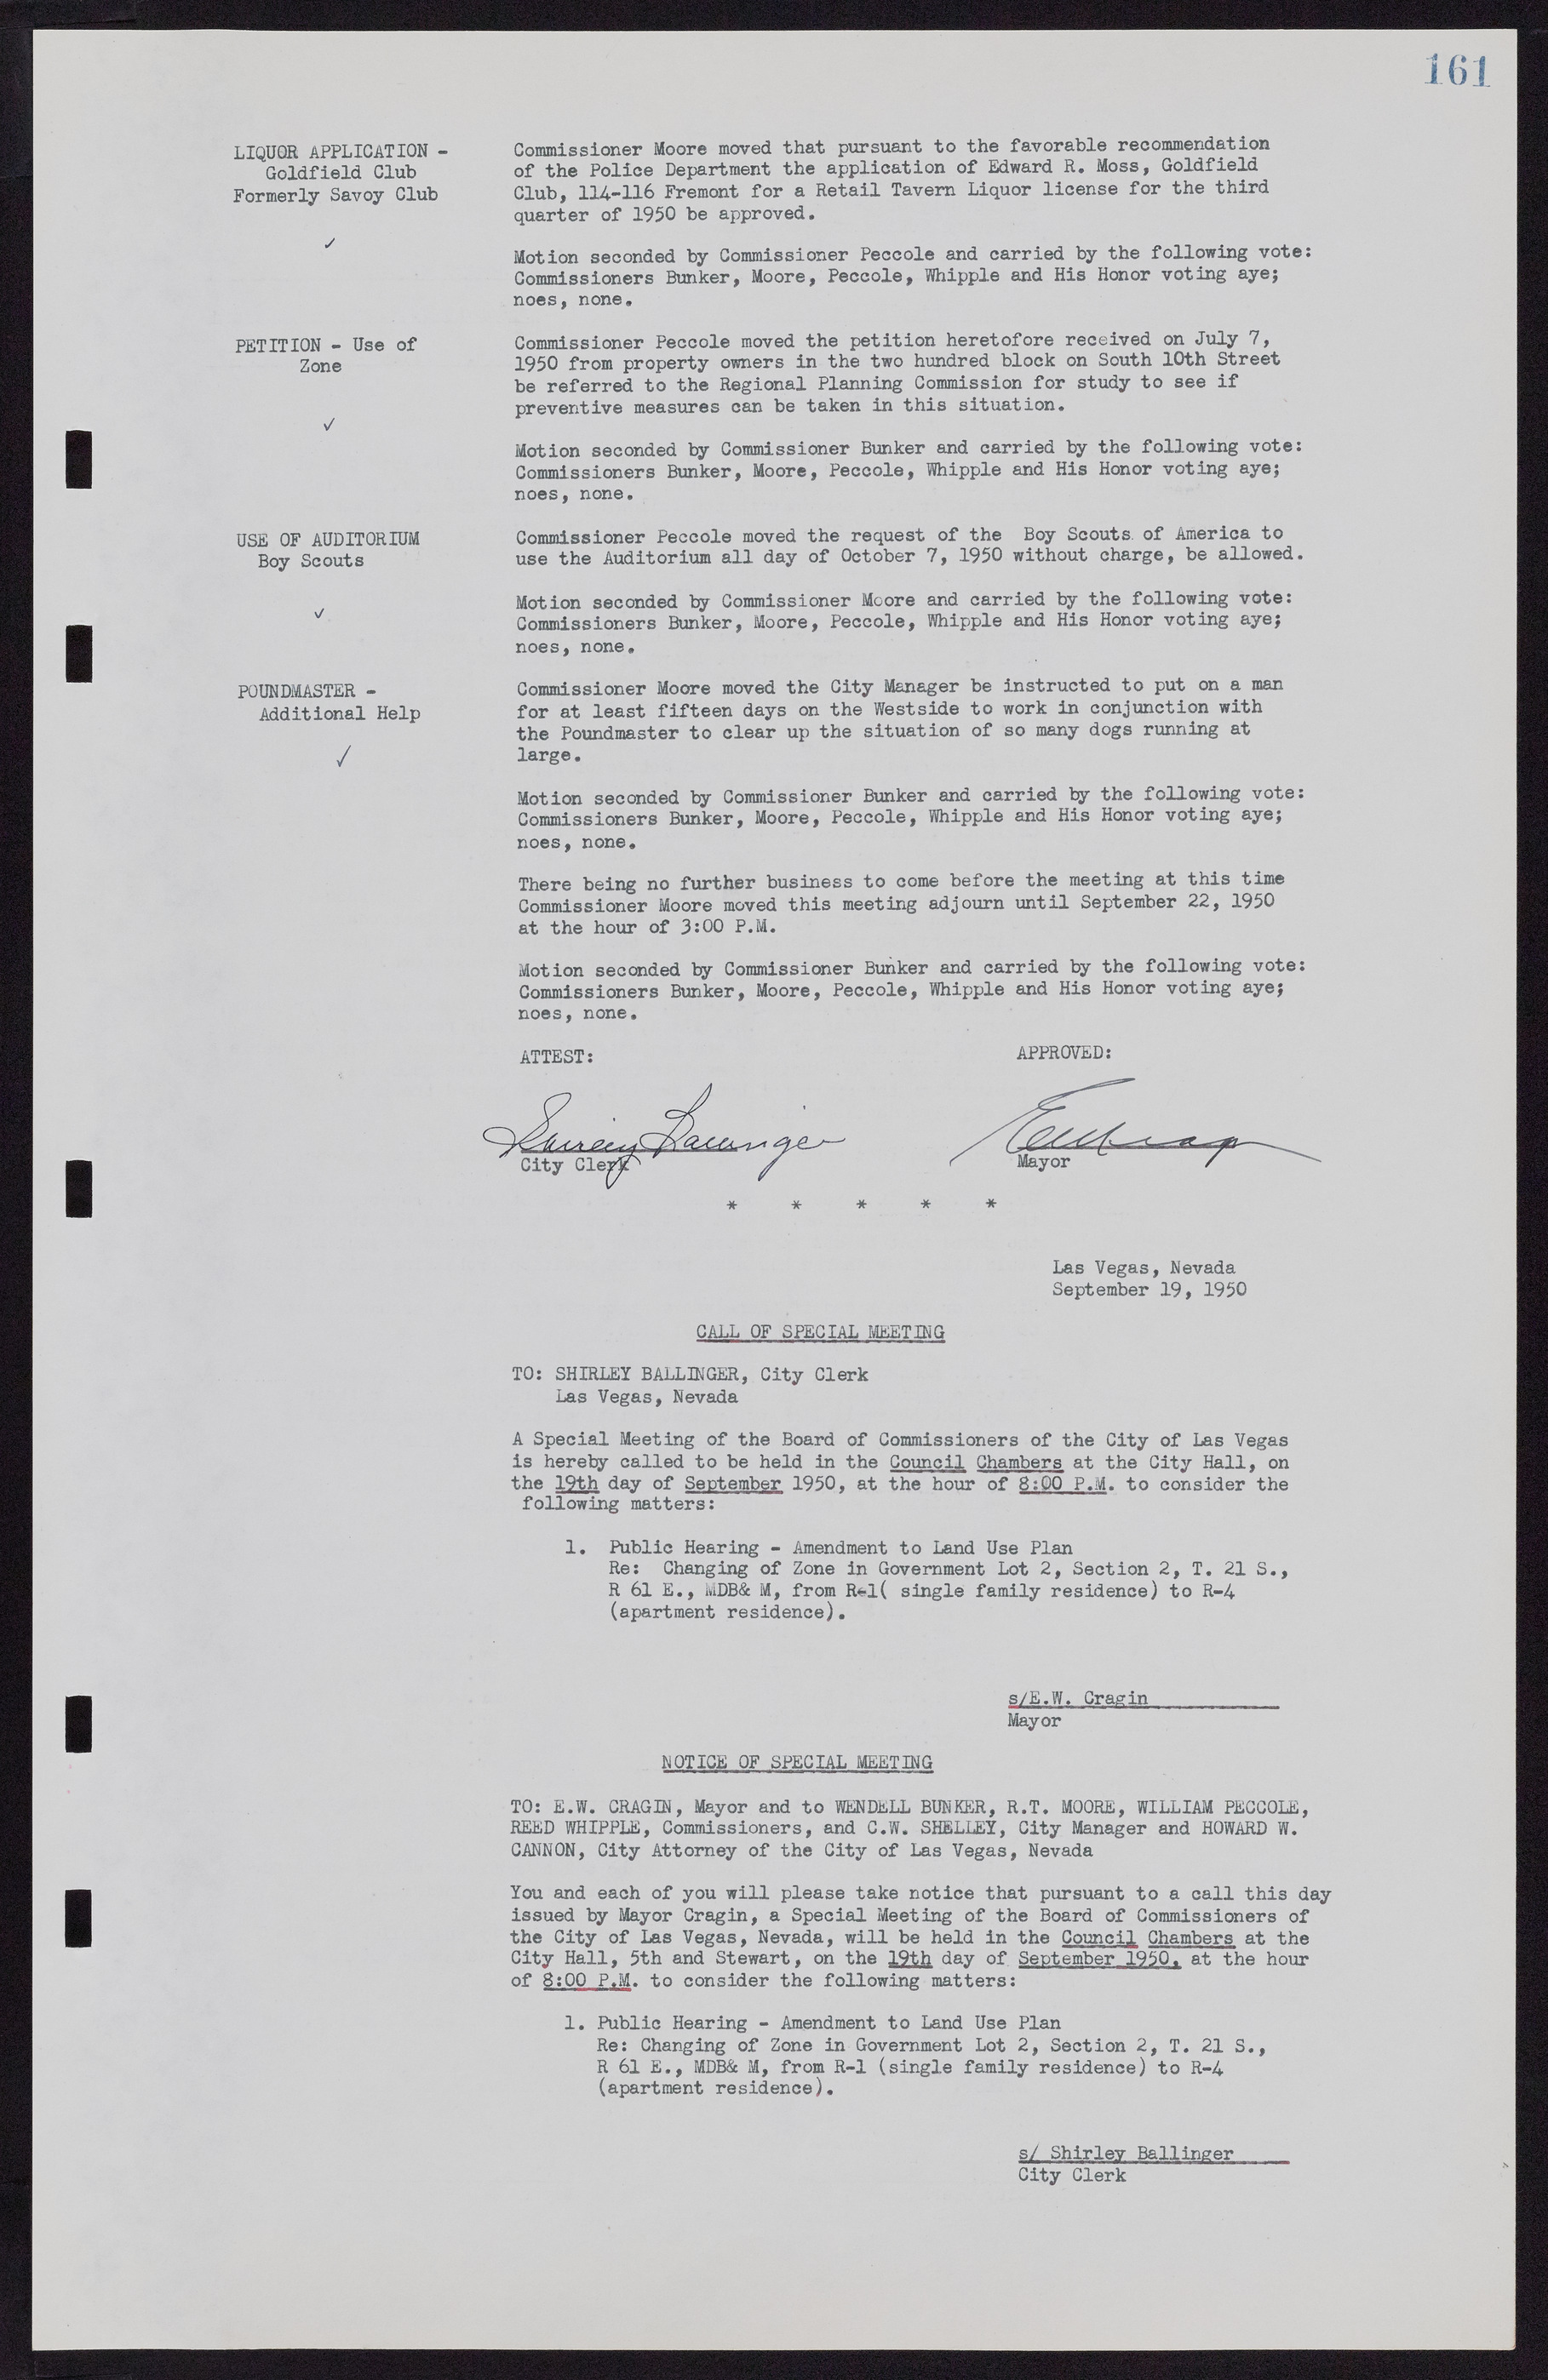 Las Vegas City Commission Minutes, November 7, 1949 to May 21, 1952, lvc000007-171